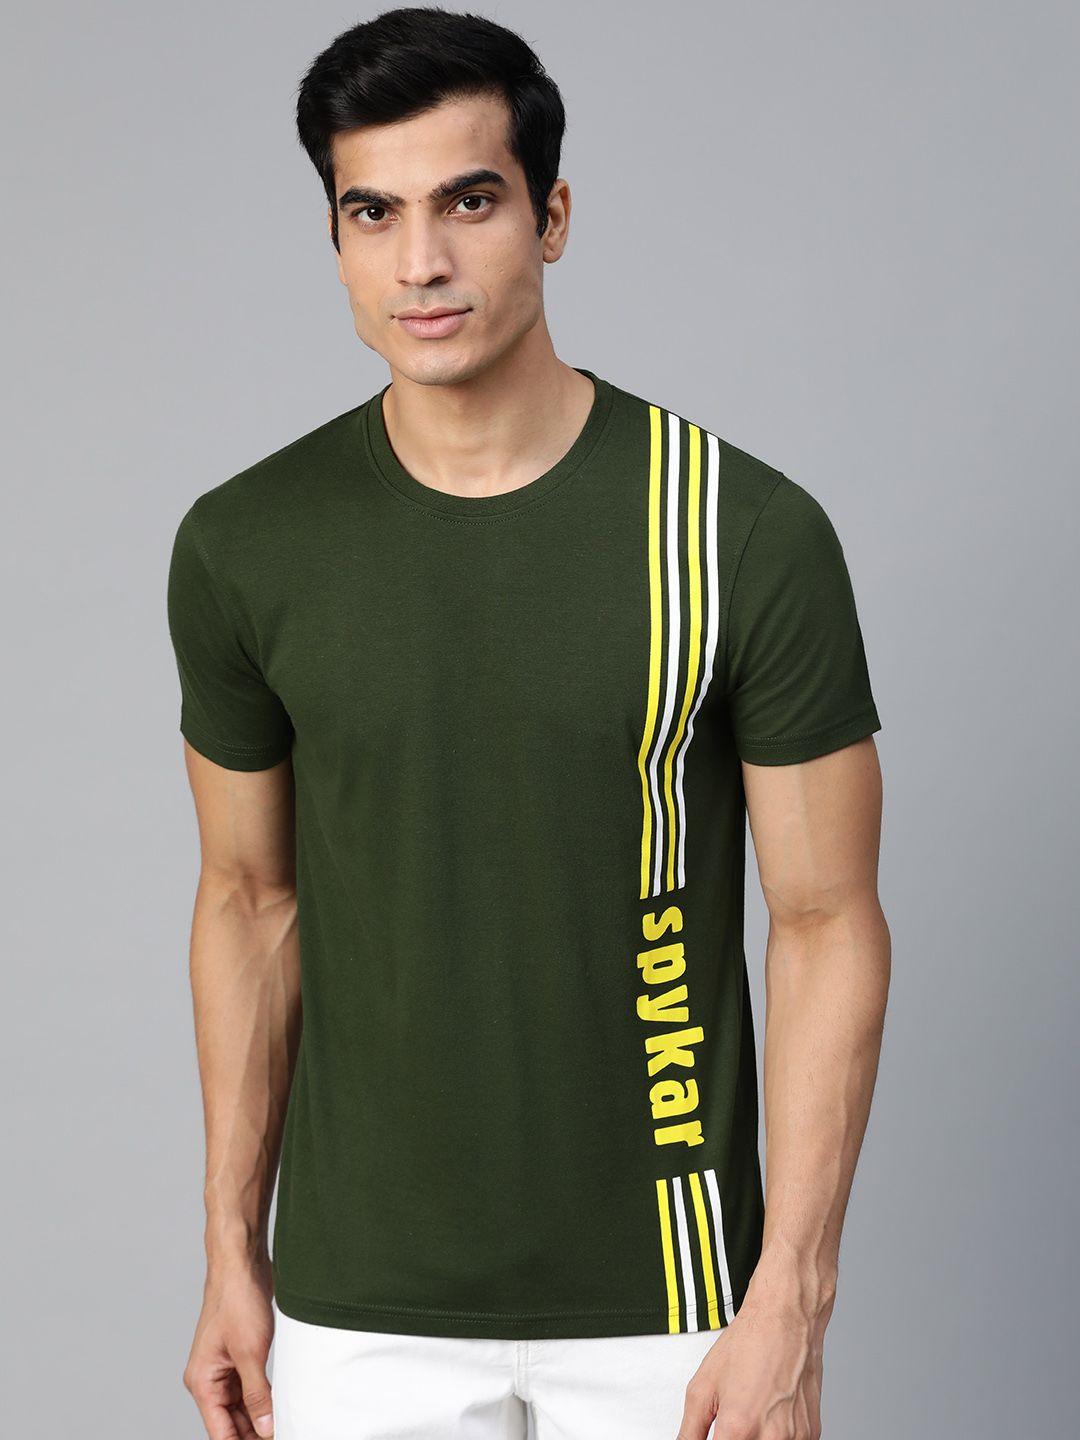 underjeans-by-spykar-men-olive-green-striped-detail-round-neck-t-shirt